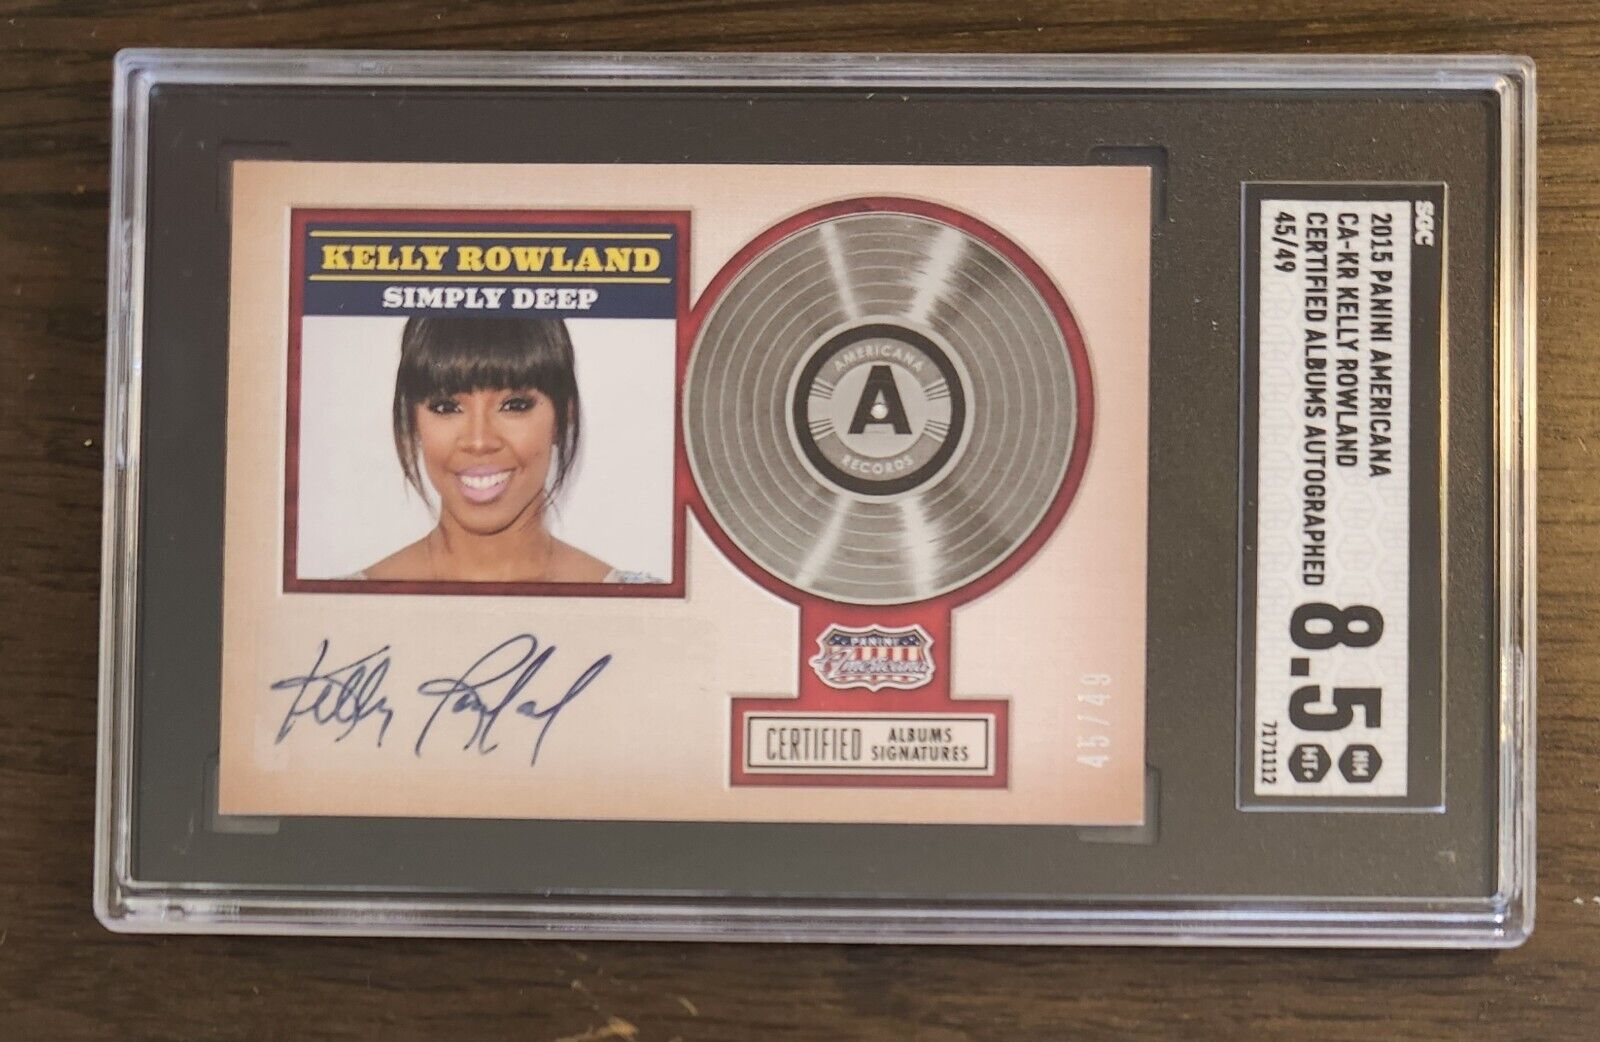 2015 Panini Americana Kelly Rowland Albums Auto #/49 SGC 8.5 Destiny's Child